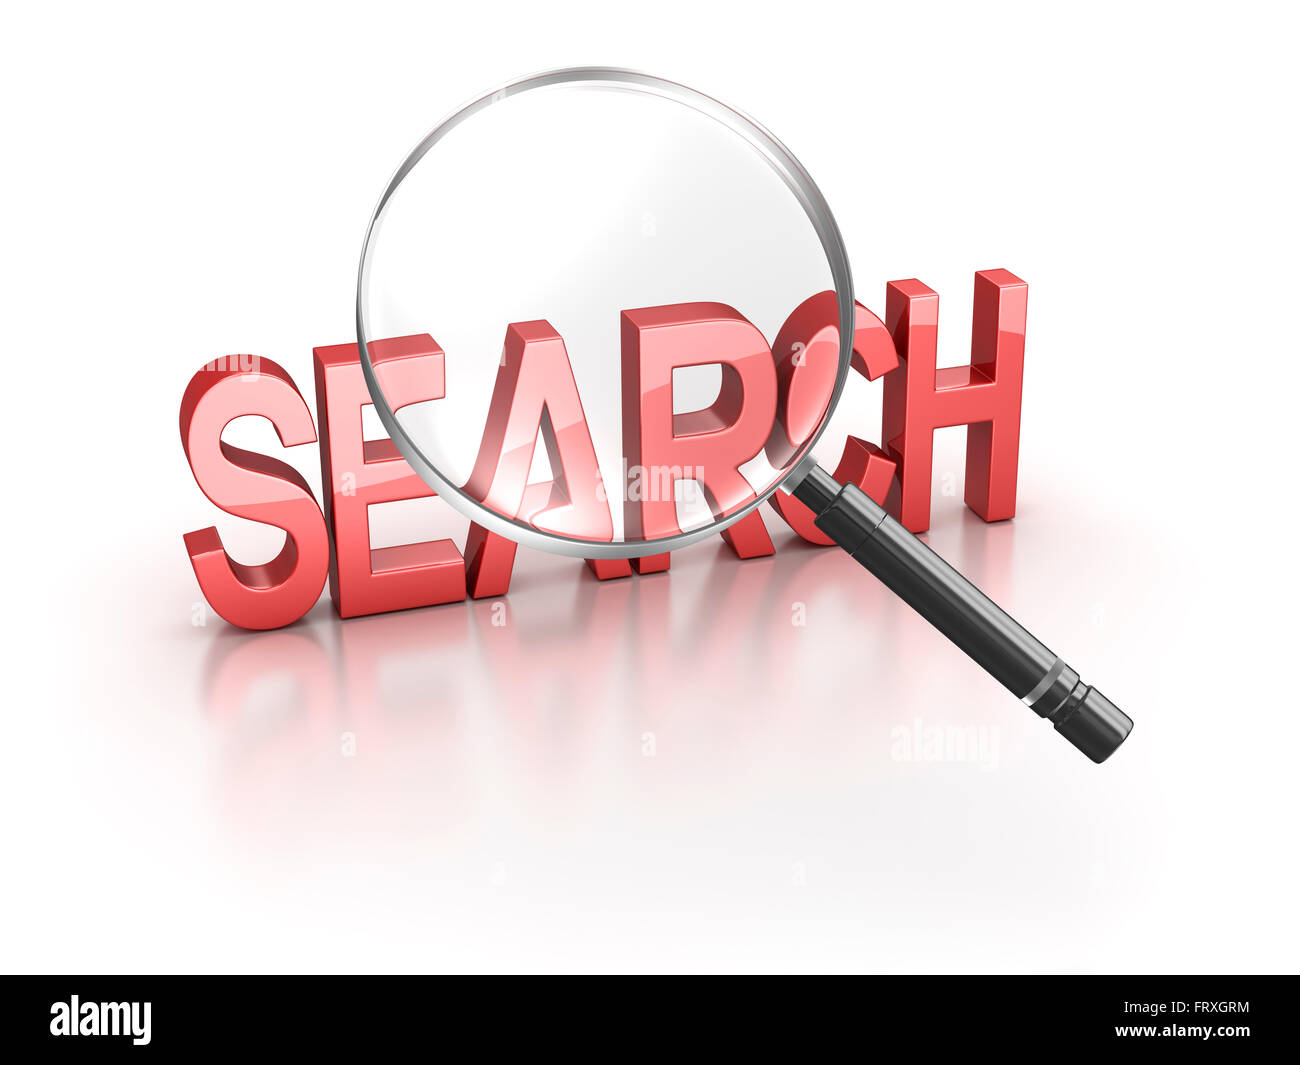 Search Stock Photo